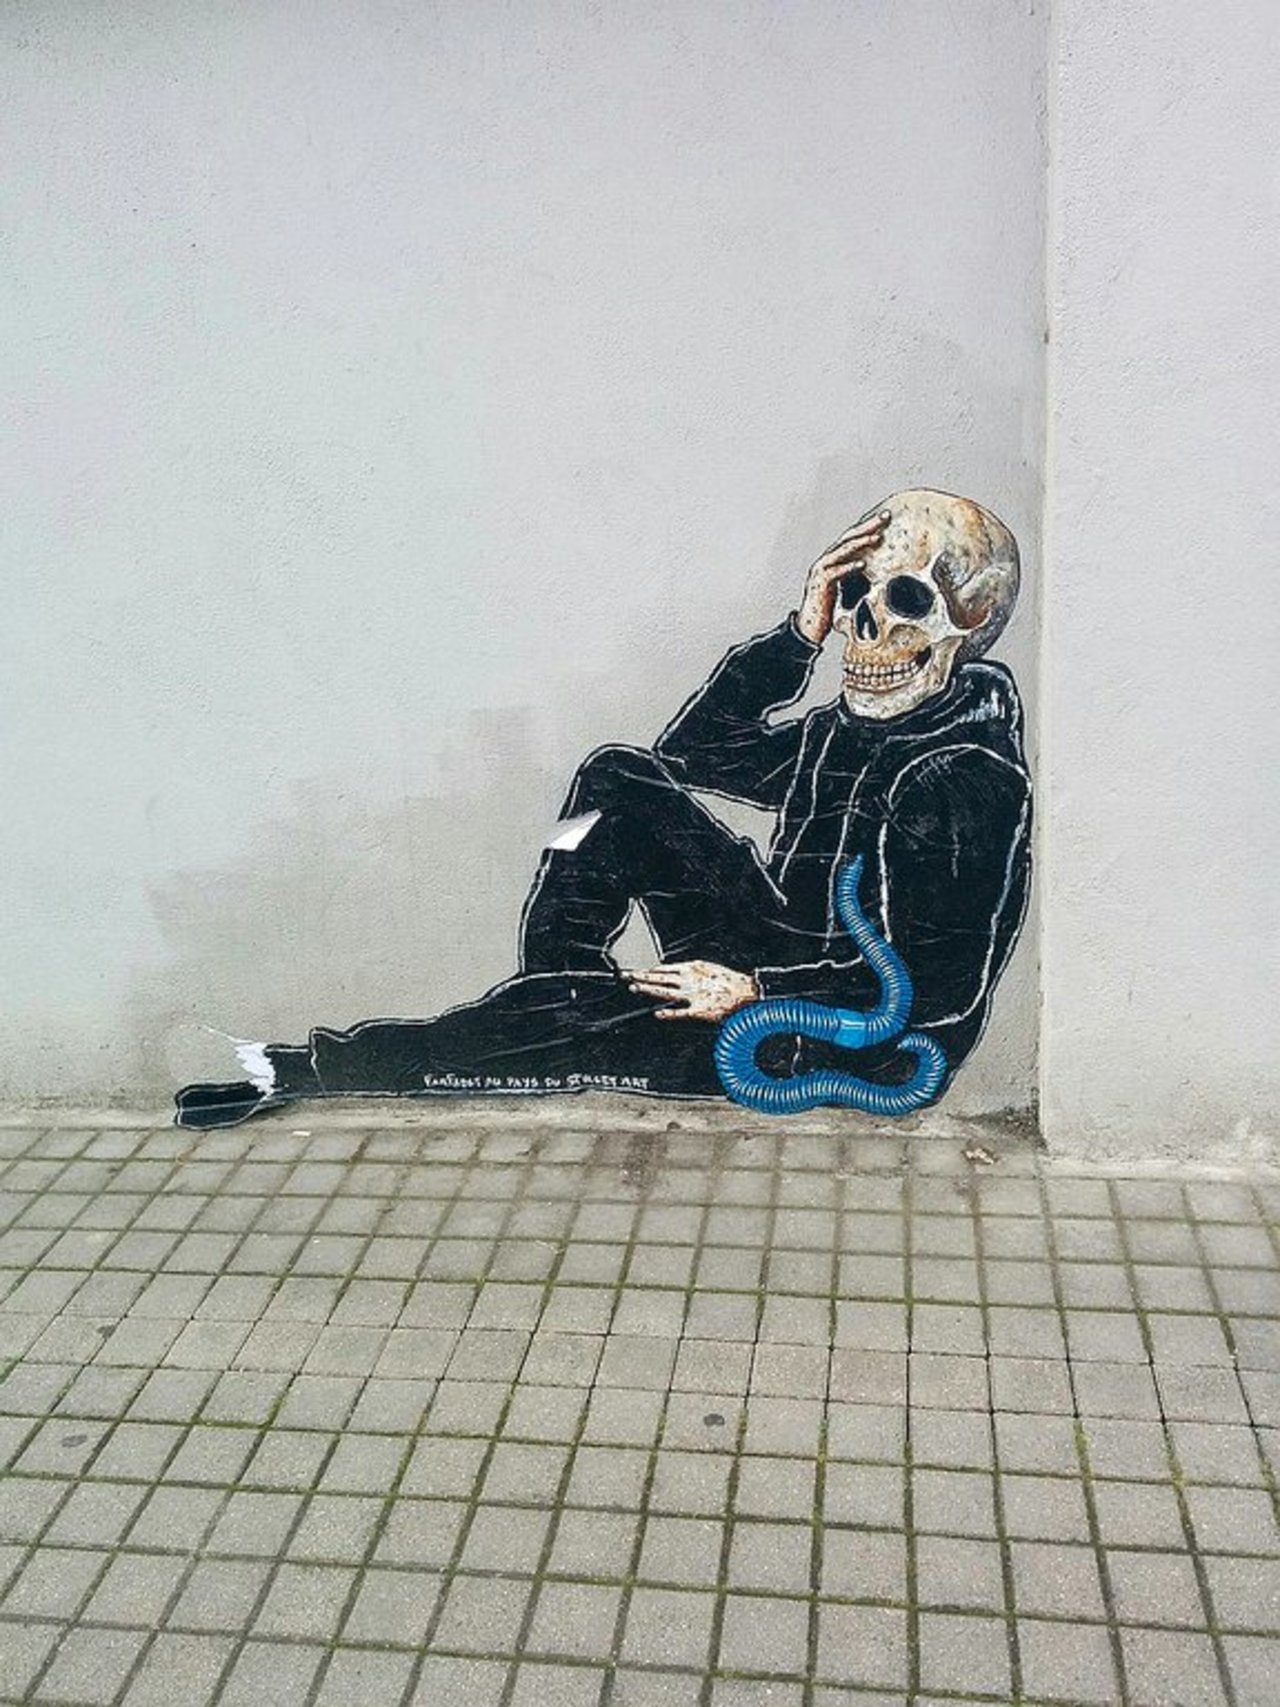 Street Art by anonymous in #Nantes http://www.urbacolors.com #art #mural #graffiti #streetart https://t.co/UNpG8zH6bW